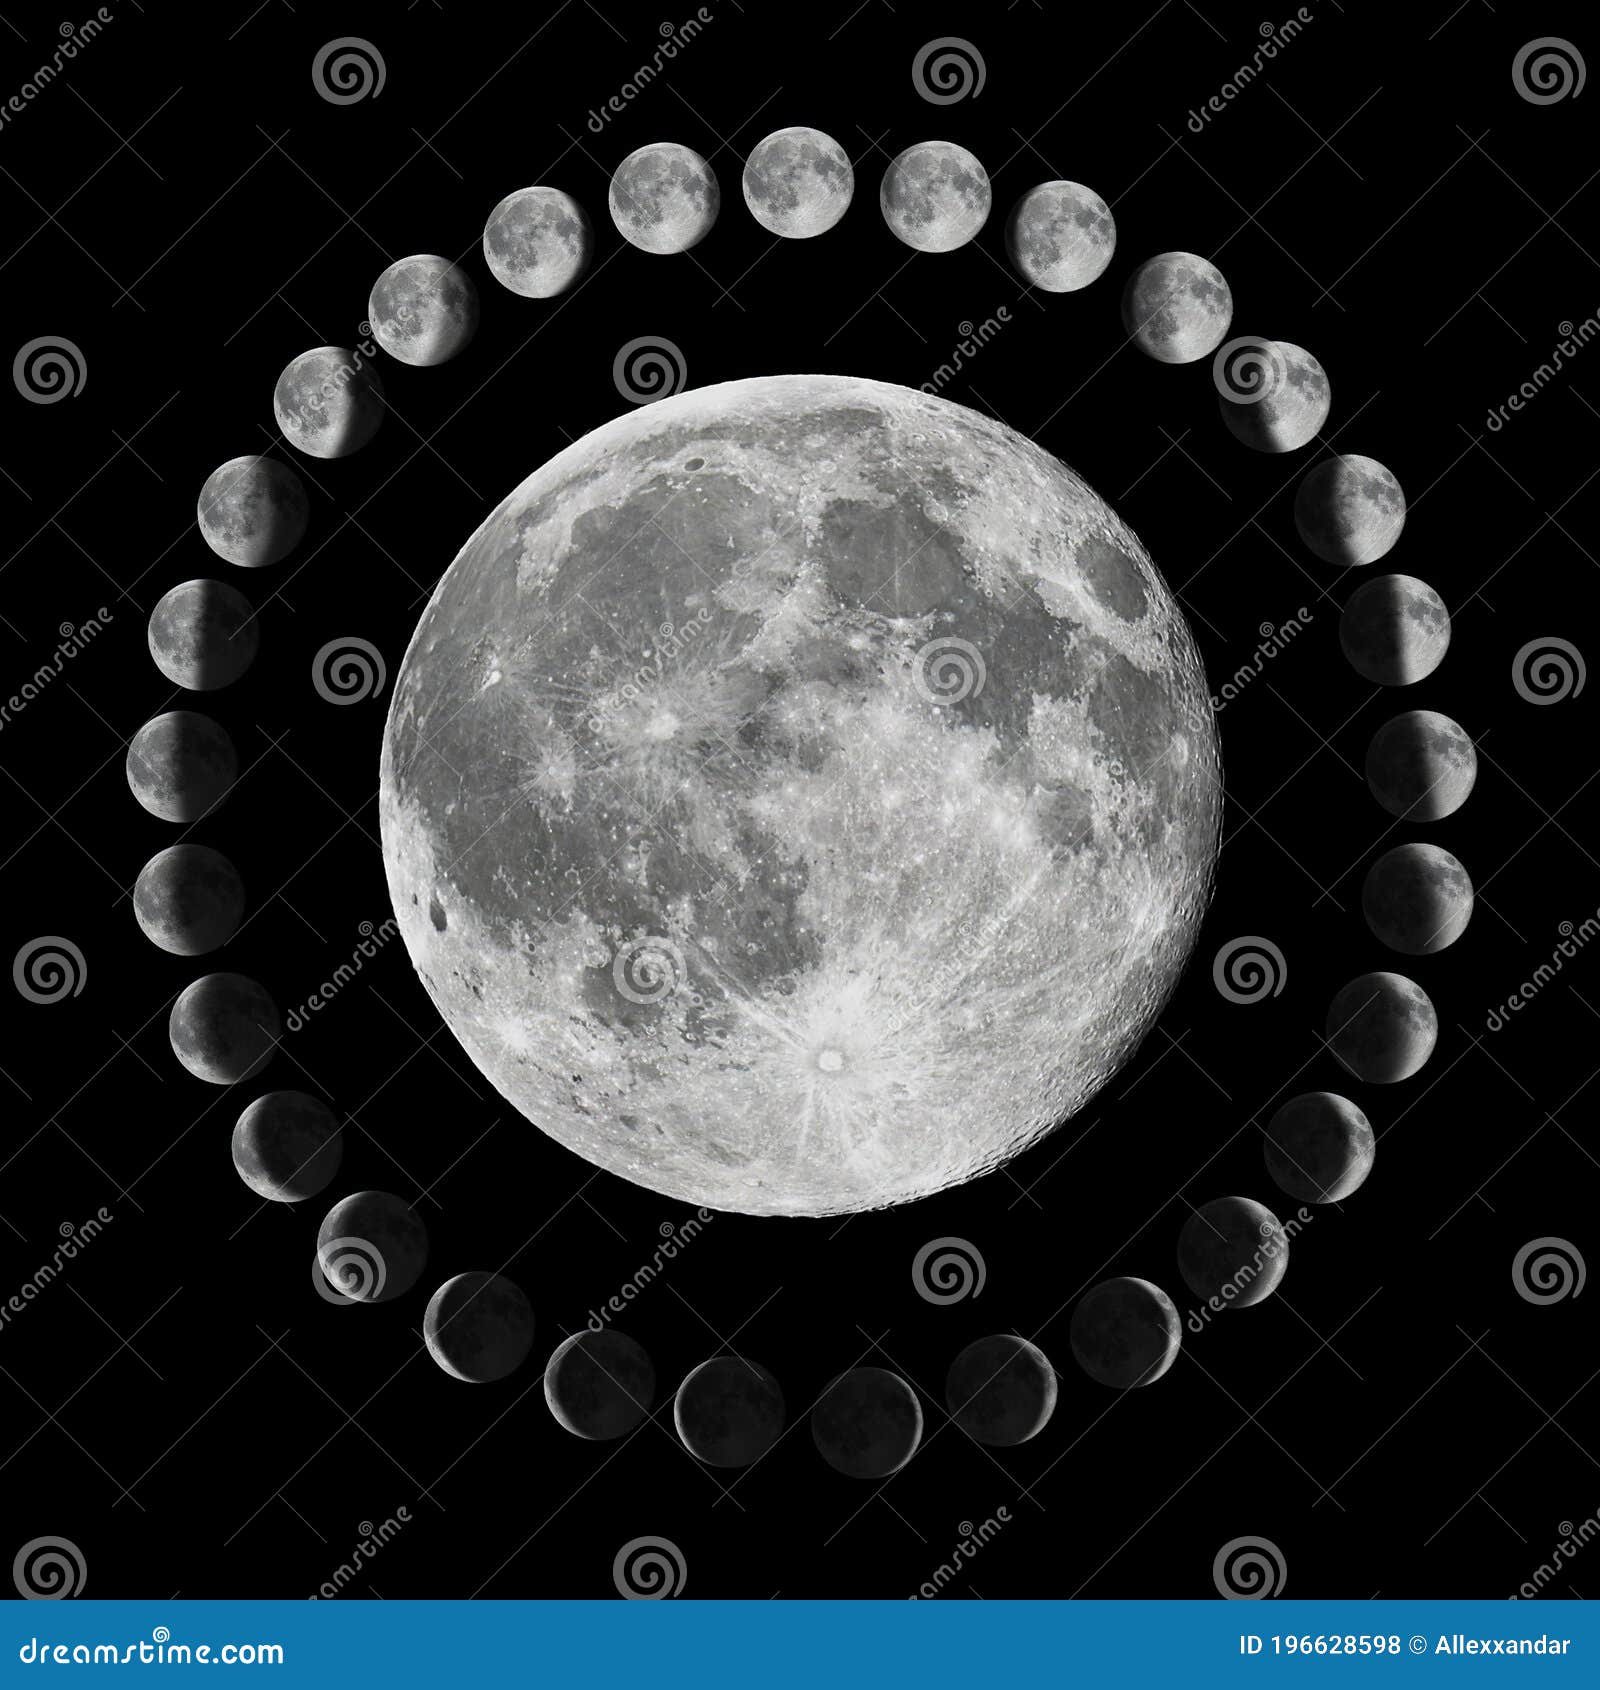 Lunar moon